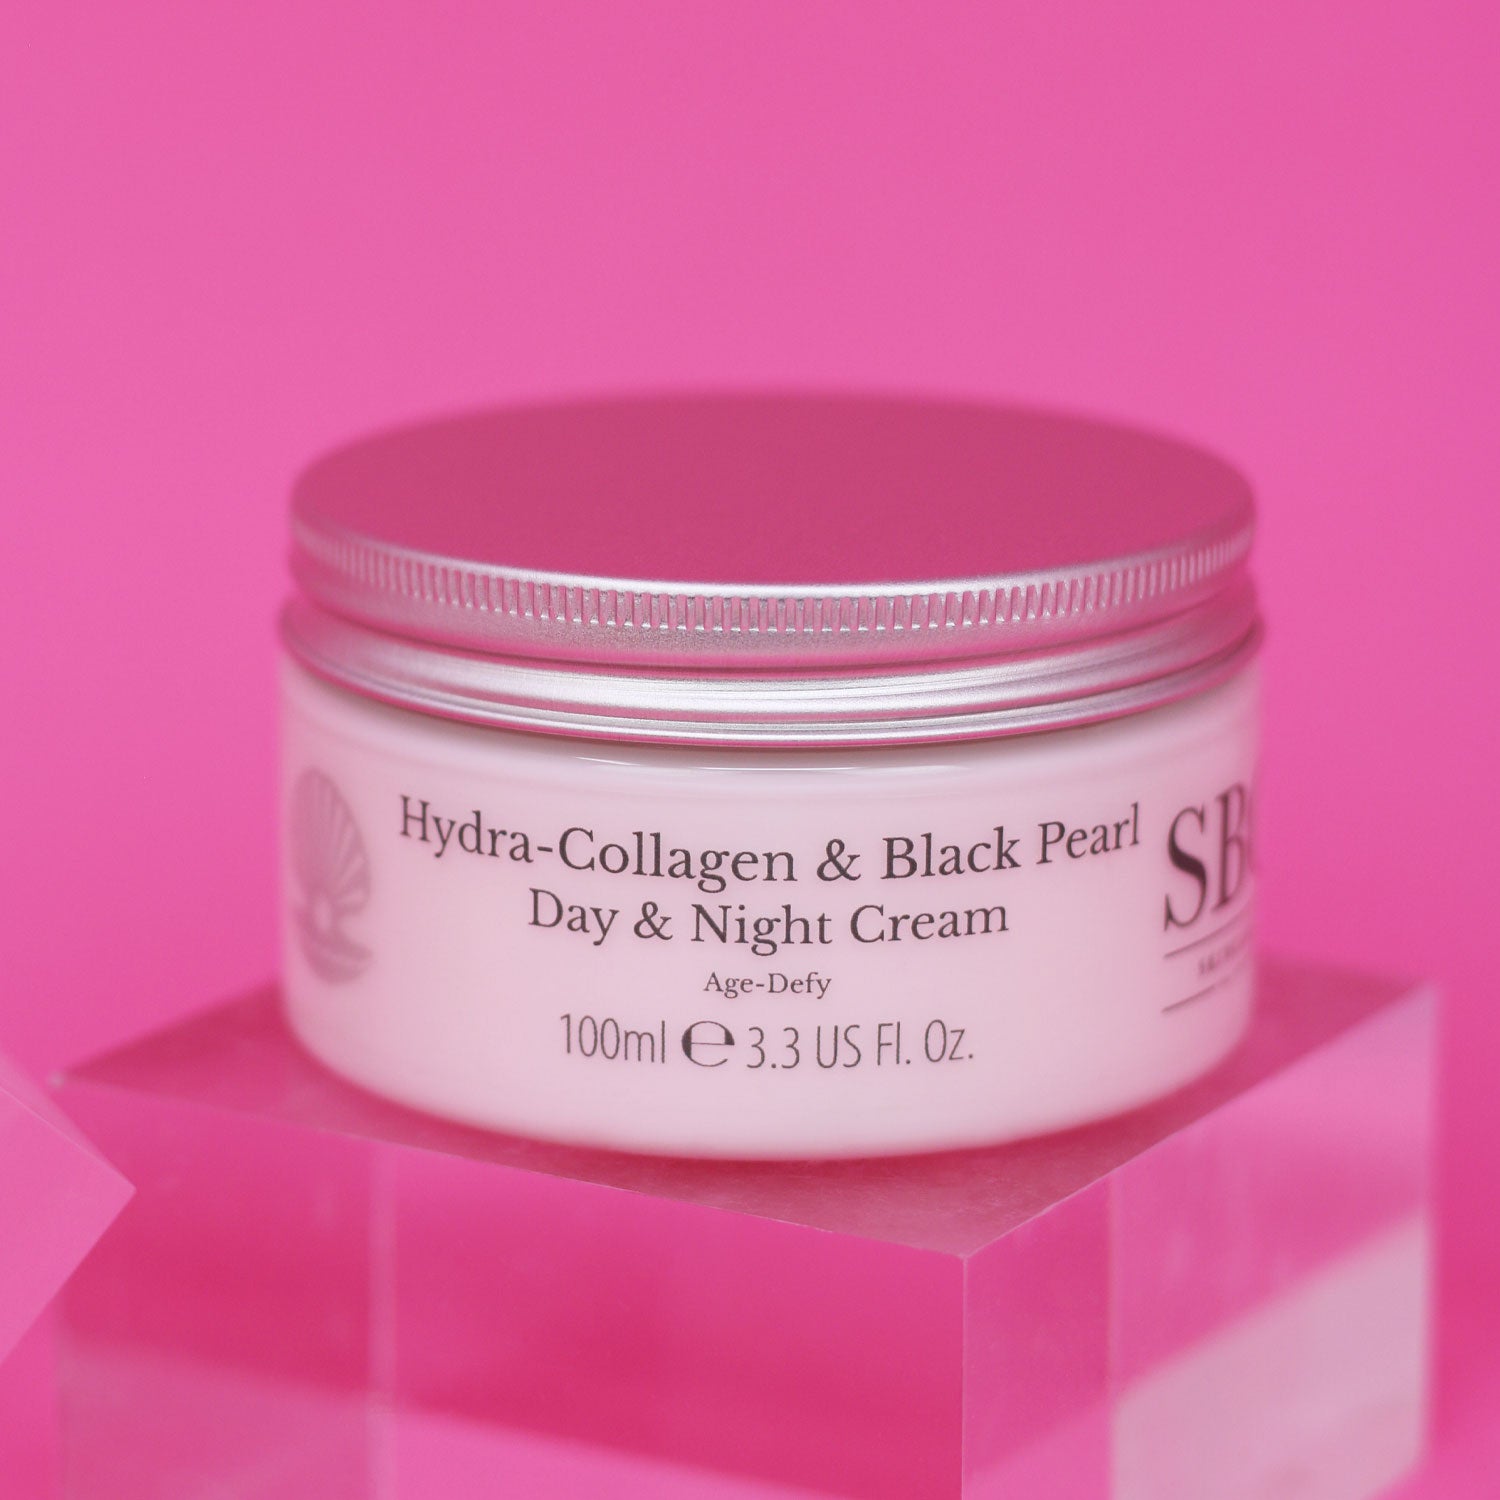 Hydra-Collagen & Black Pearl Day & Night Cream on a bright pink background 